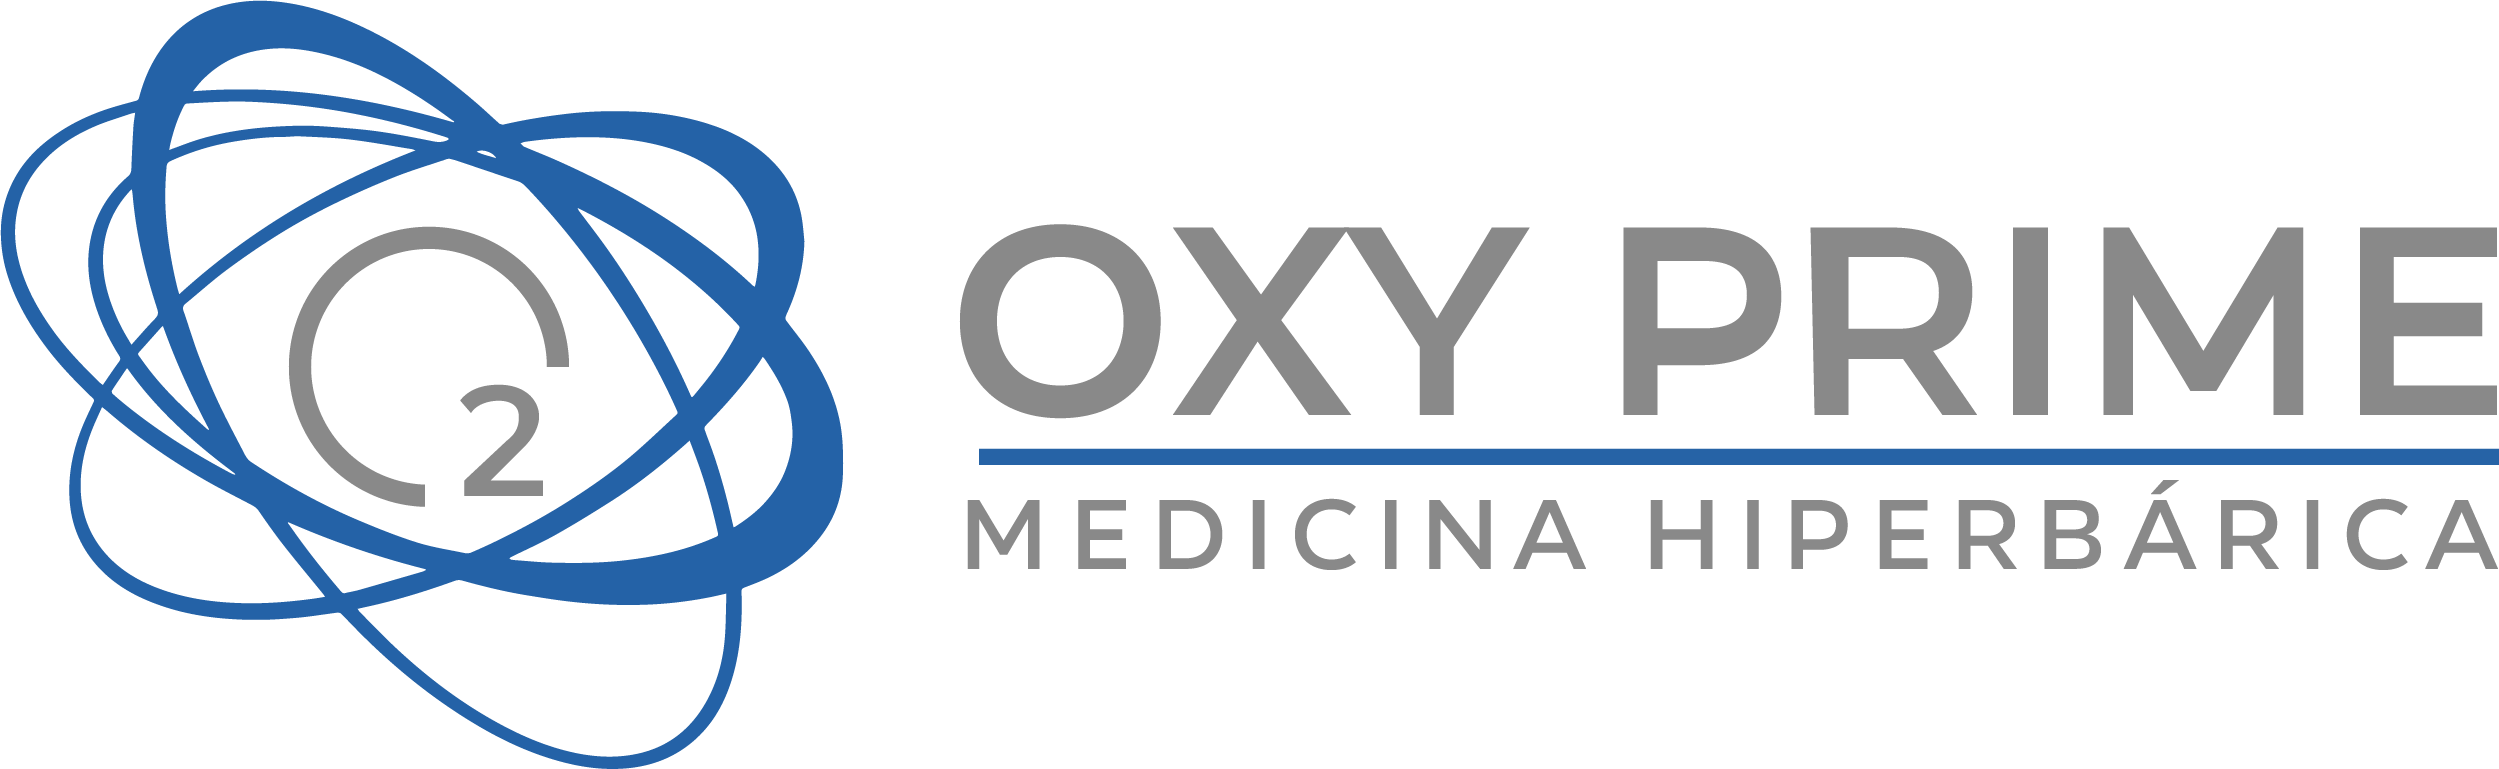 Oxy Prime